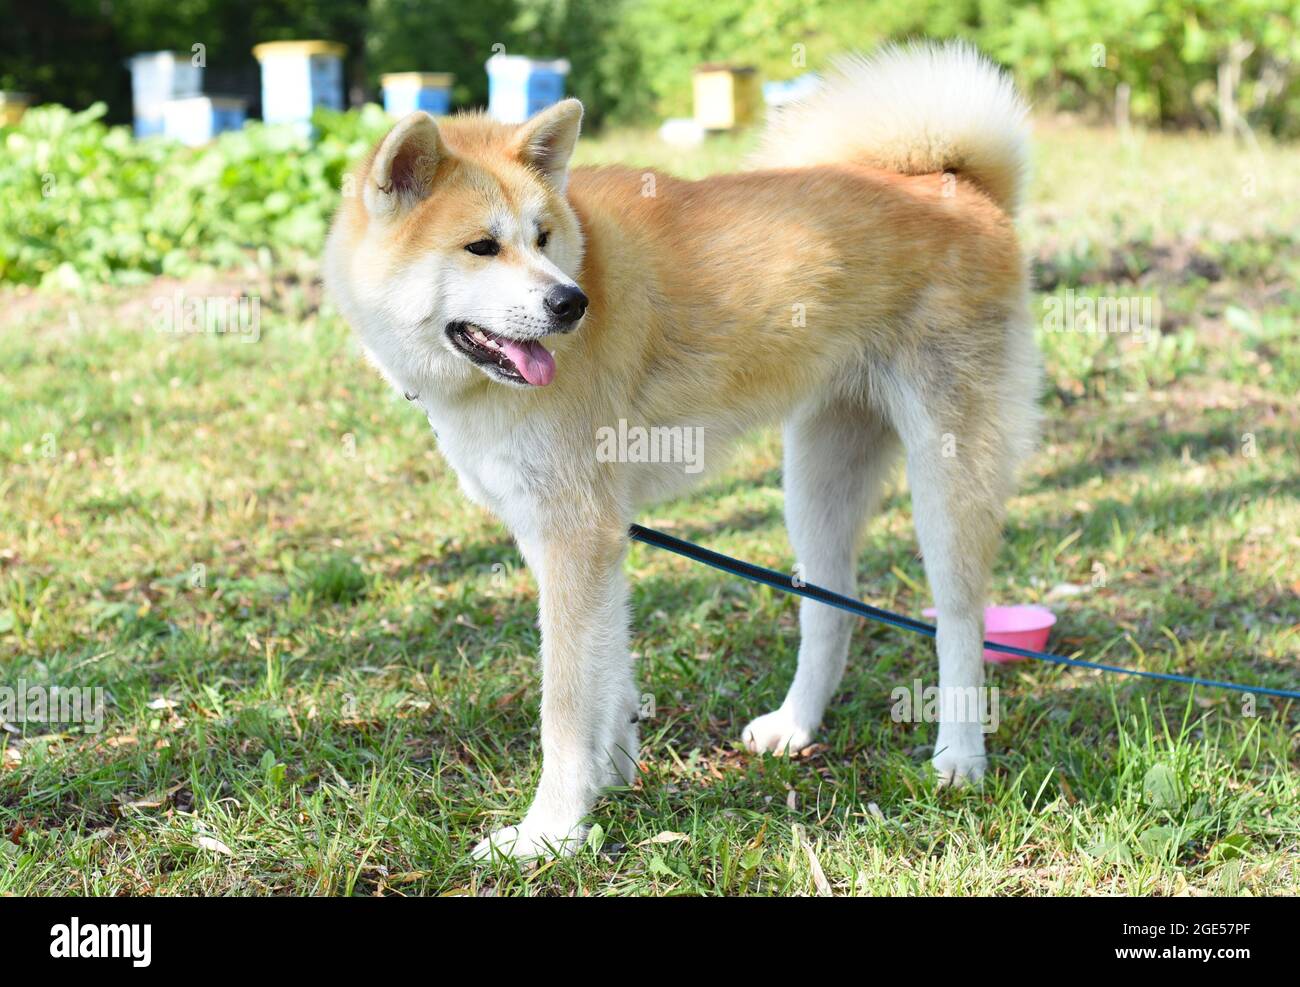 Adult Akita dog from Japan. Stock Photo